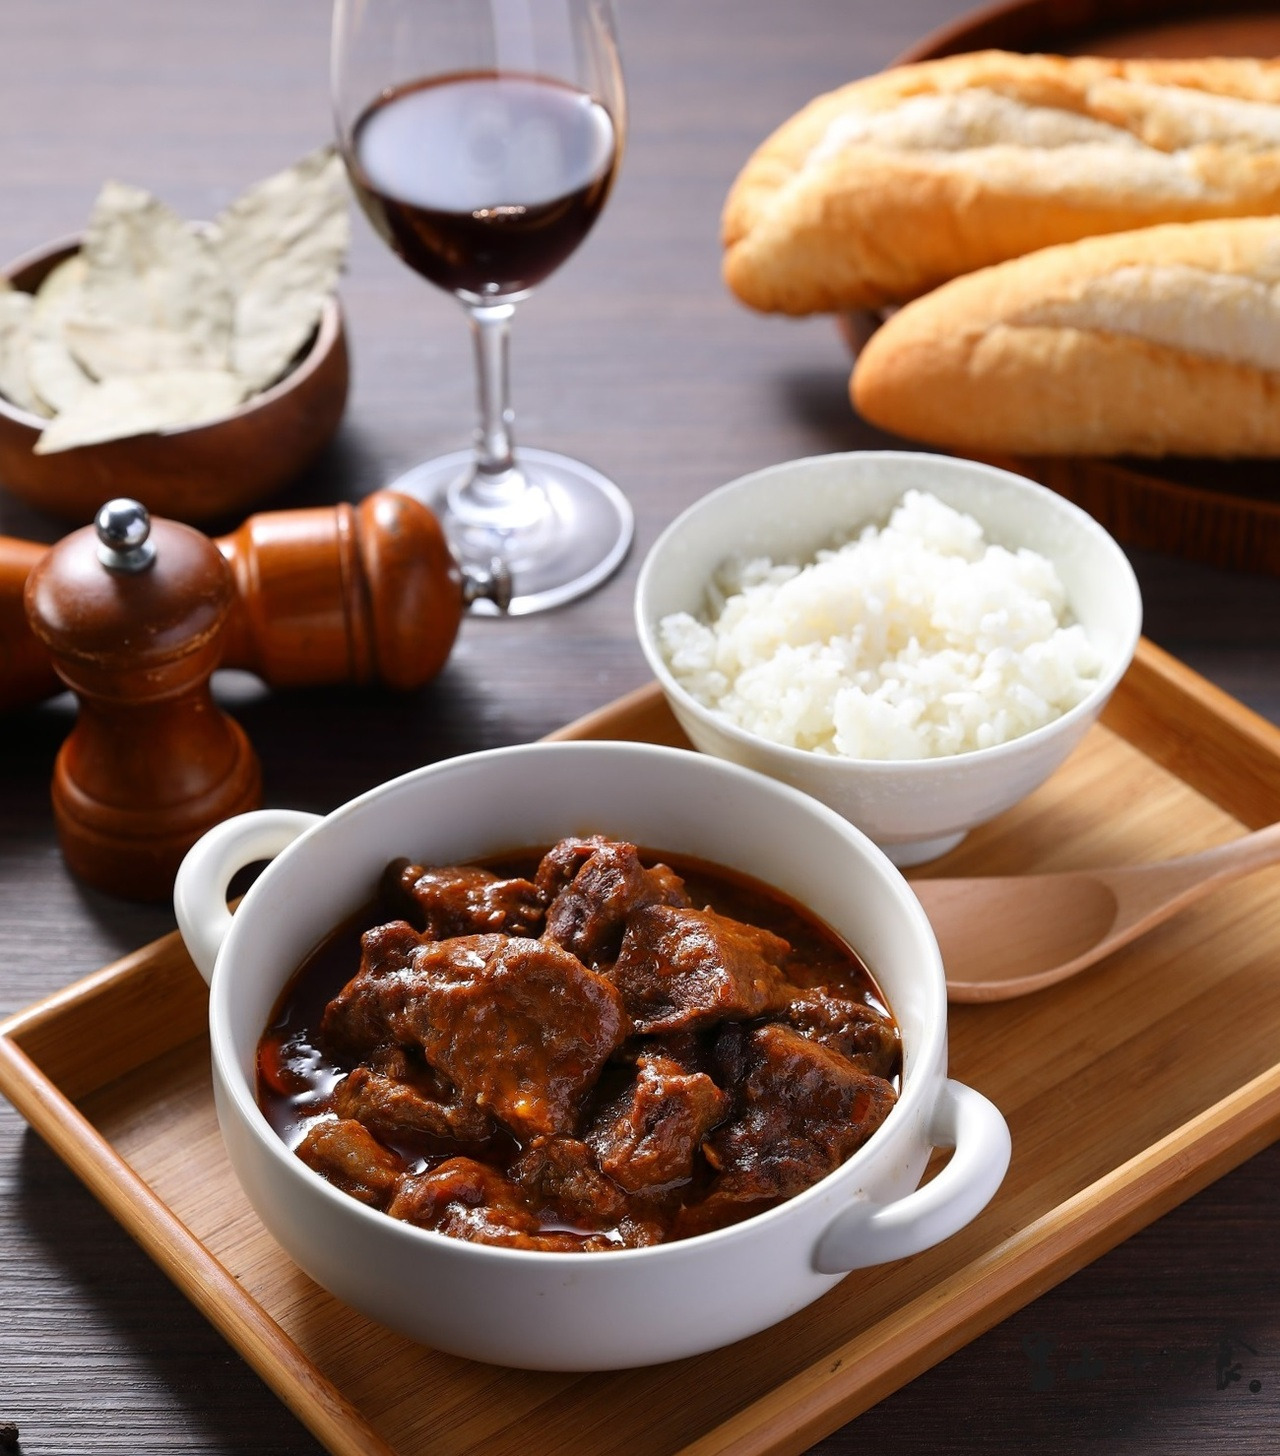 法式紅酒燉牛肉 (Beef stew/Boeuf bourguignon)